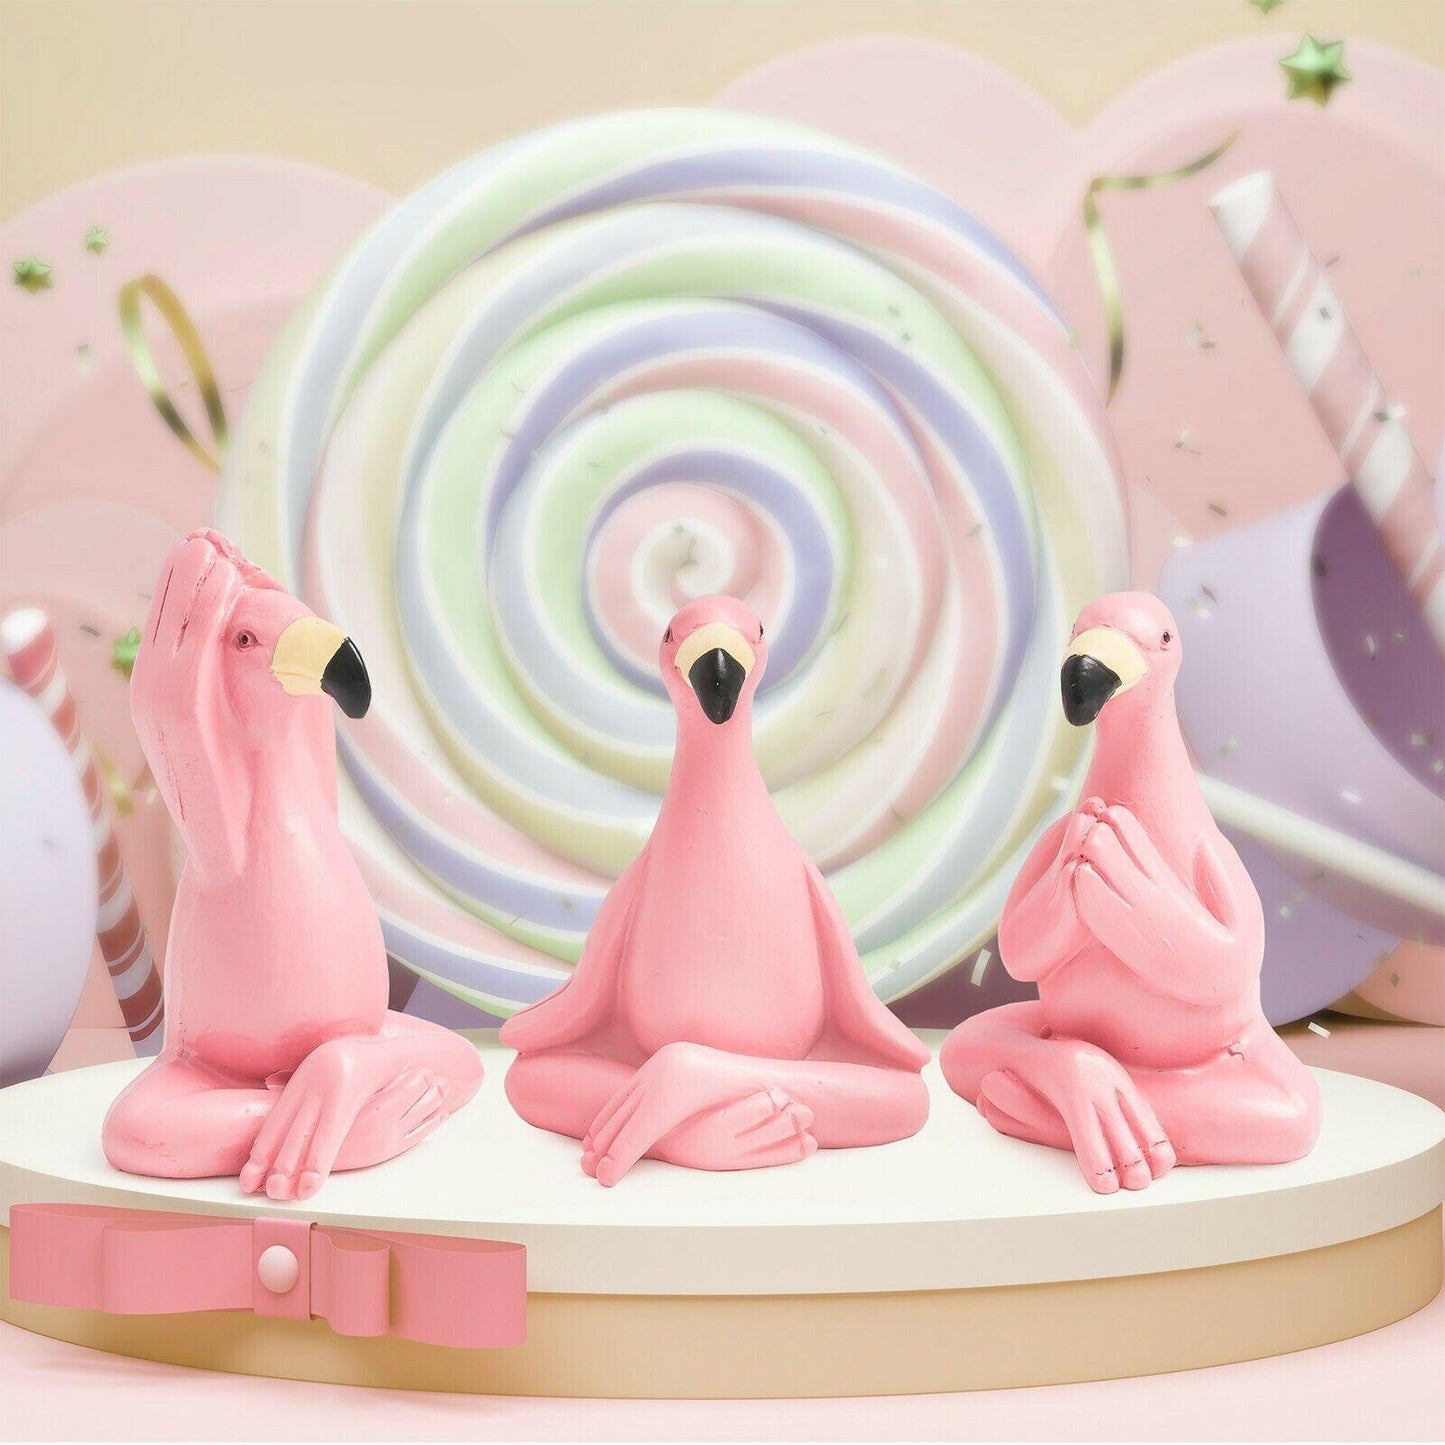 3Pcs Yoga Flamingo Ornaments Patio Mantel Decor Figurine - Home Inspired Gifts